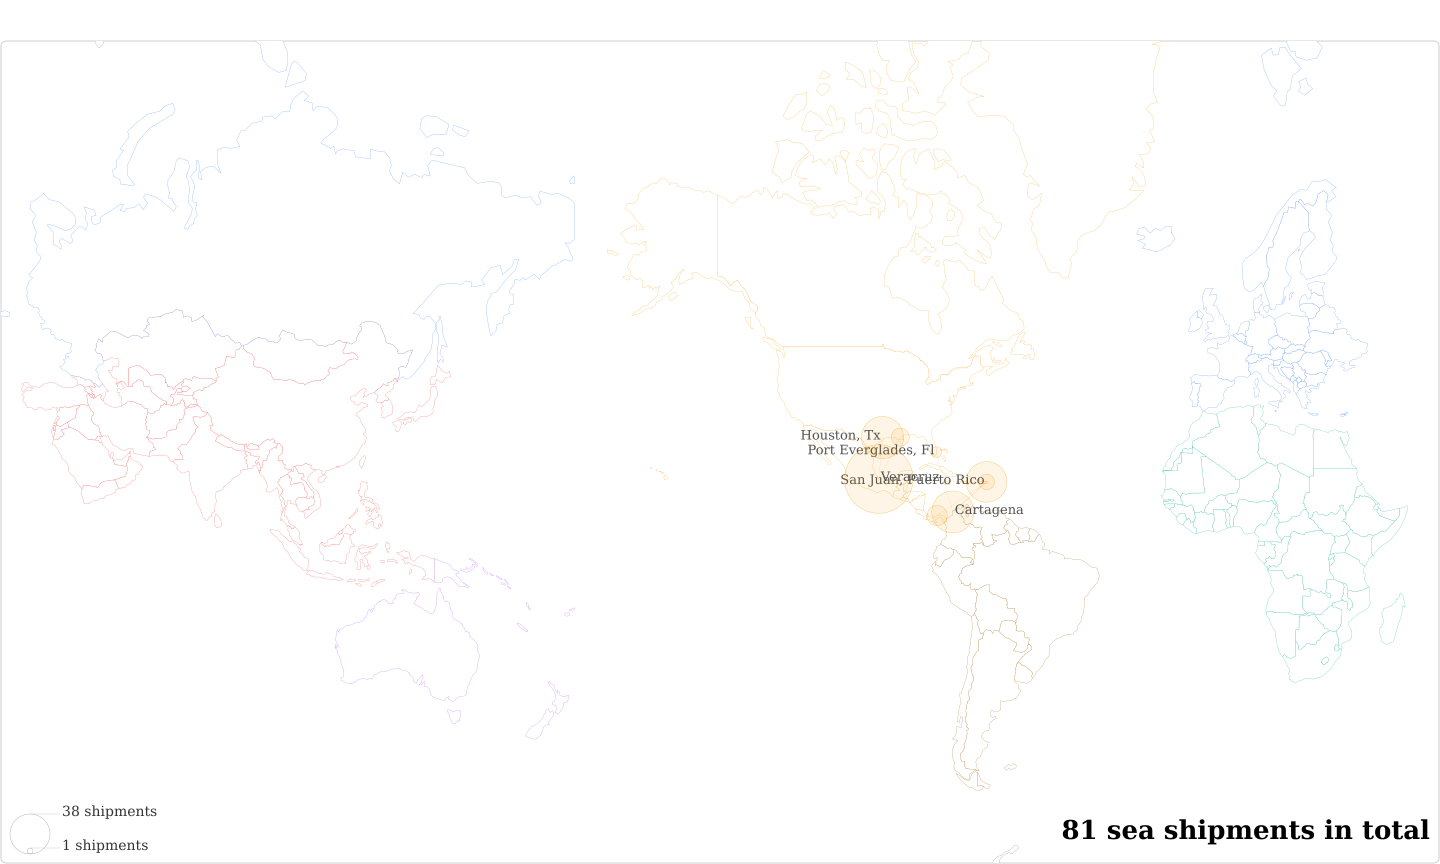 Unilever Manufacturera De's Imports Per Country Map